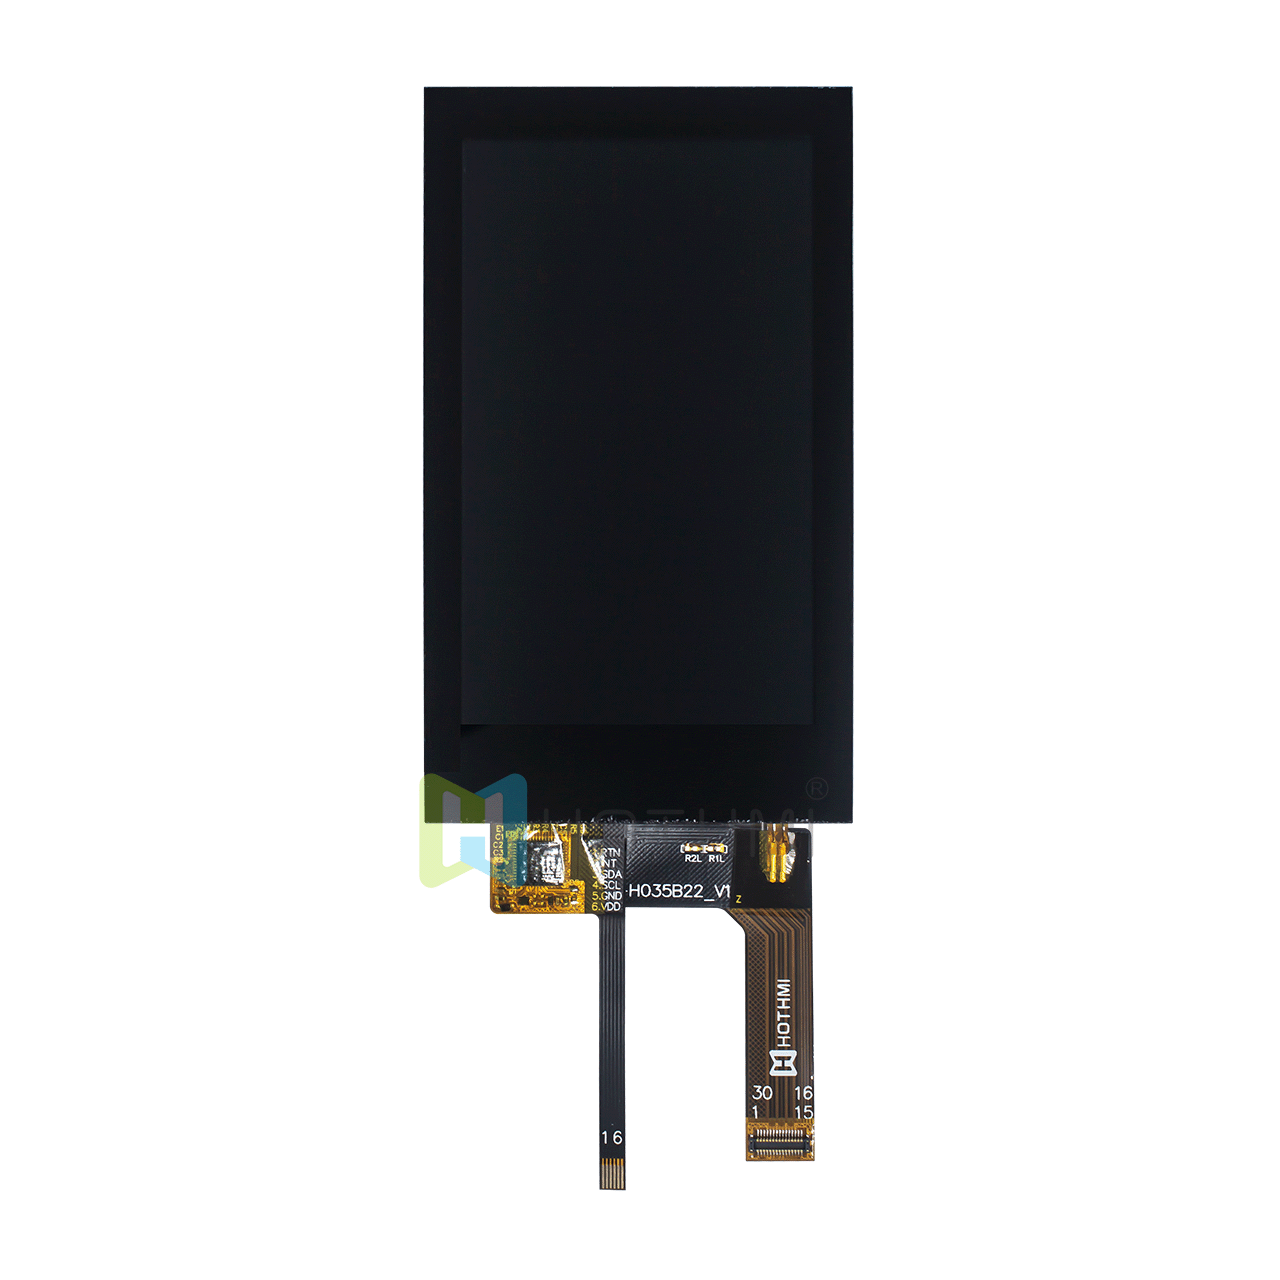 IPS 3.5寸TFT液晶显示模组/480x800像素/ST7701S/电容触摸/MIPI接口/3.3V/兼容安卓